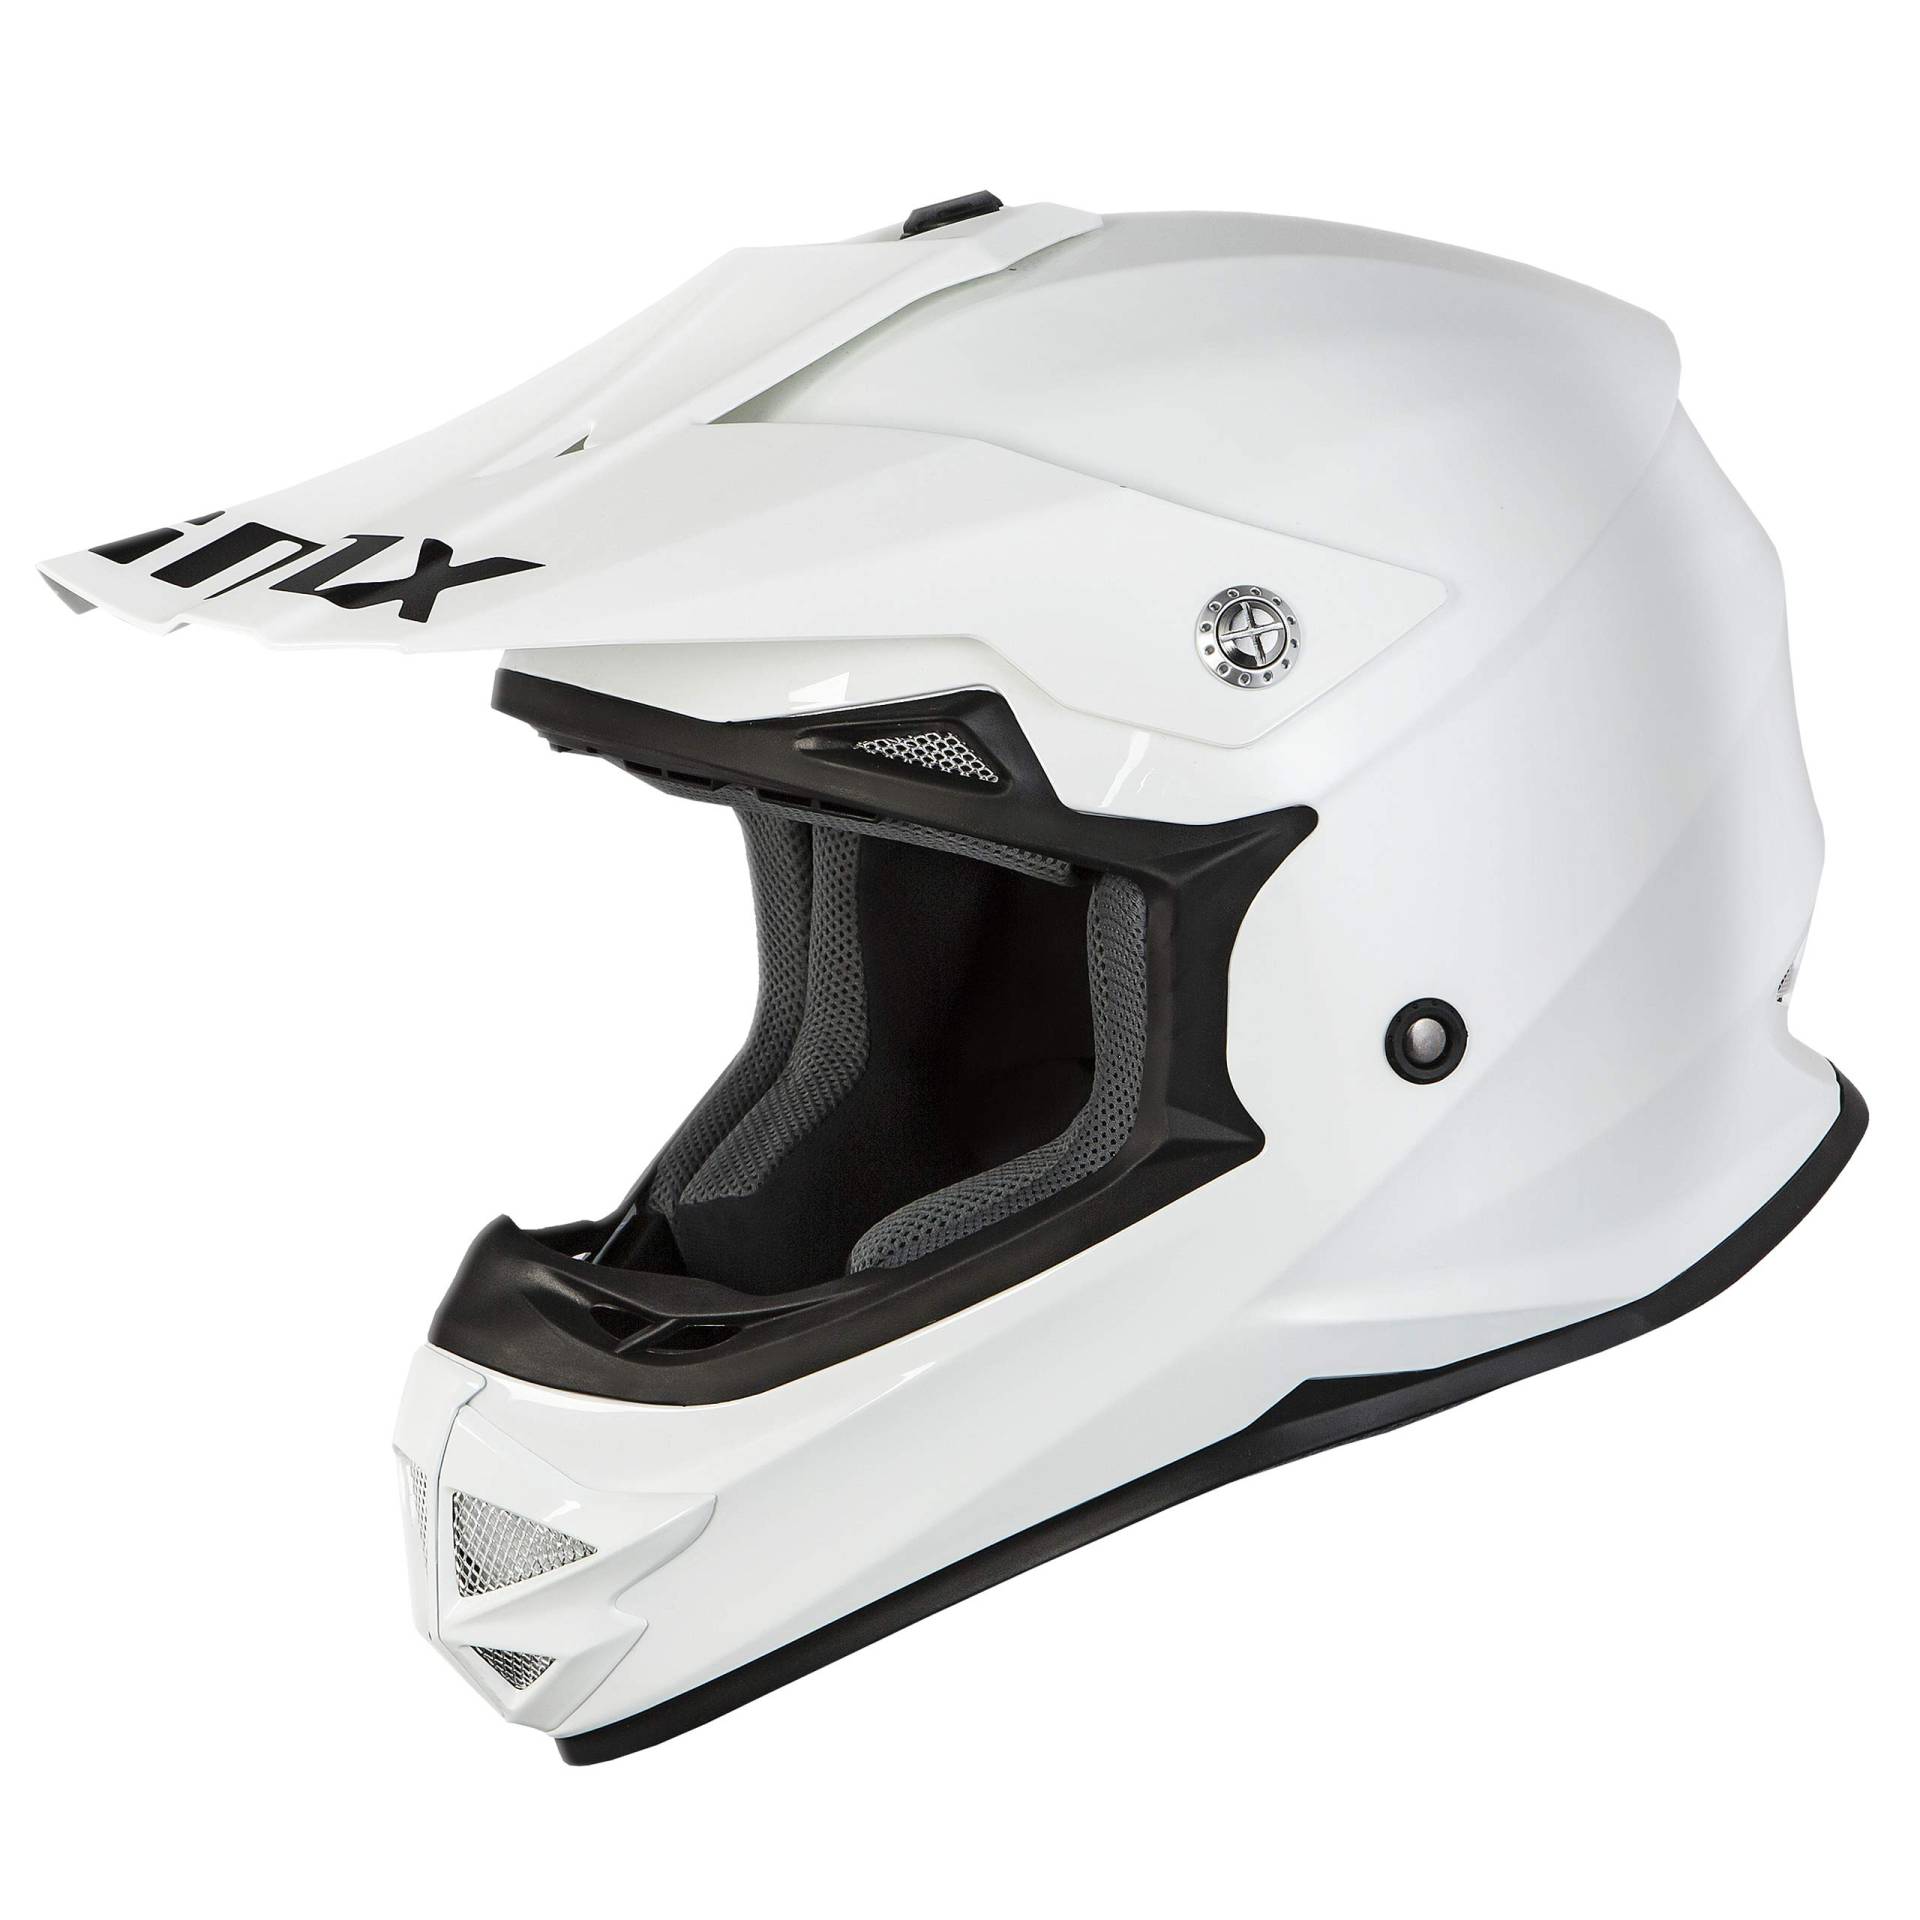 IMX RACING FMX-1 Motorradhelm für Motocross Enduro | Polycarbonatschale | Abnehmbare Wangenpolster und Helmfutter | Mikrometrischer Verschluss | Belüftung von IMX RACING